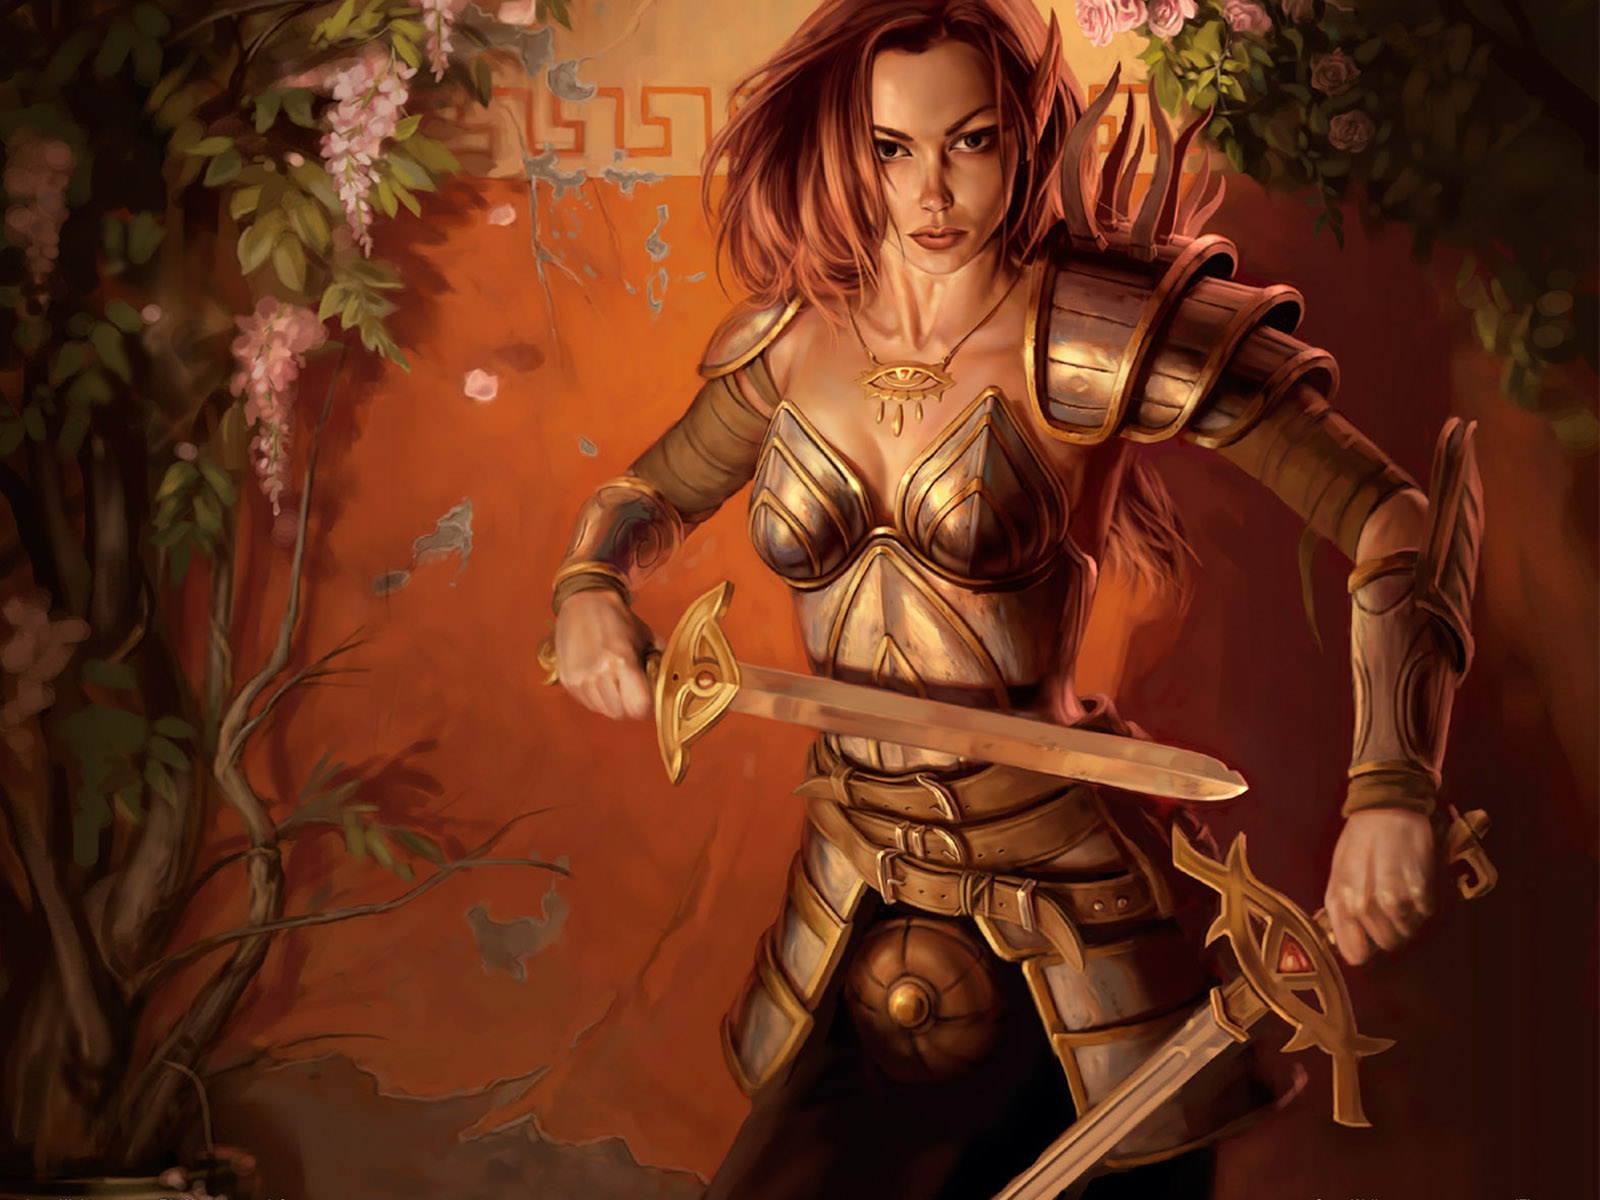 hot fantasy girl wallpaper,cg artwork,mythology,illustration,art,adventure game